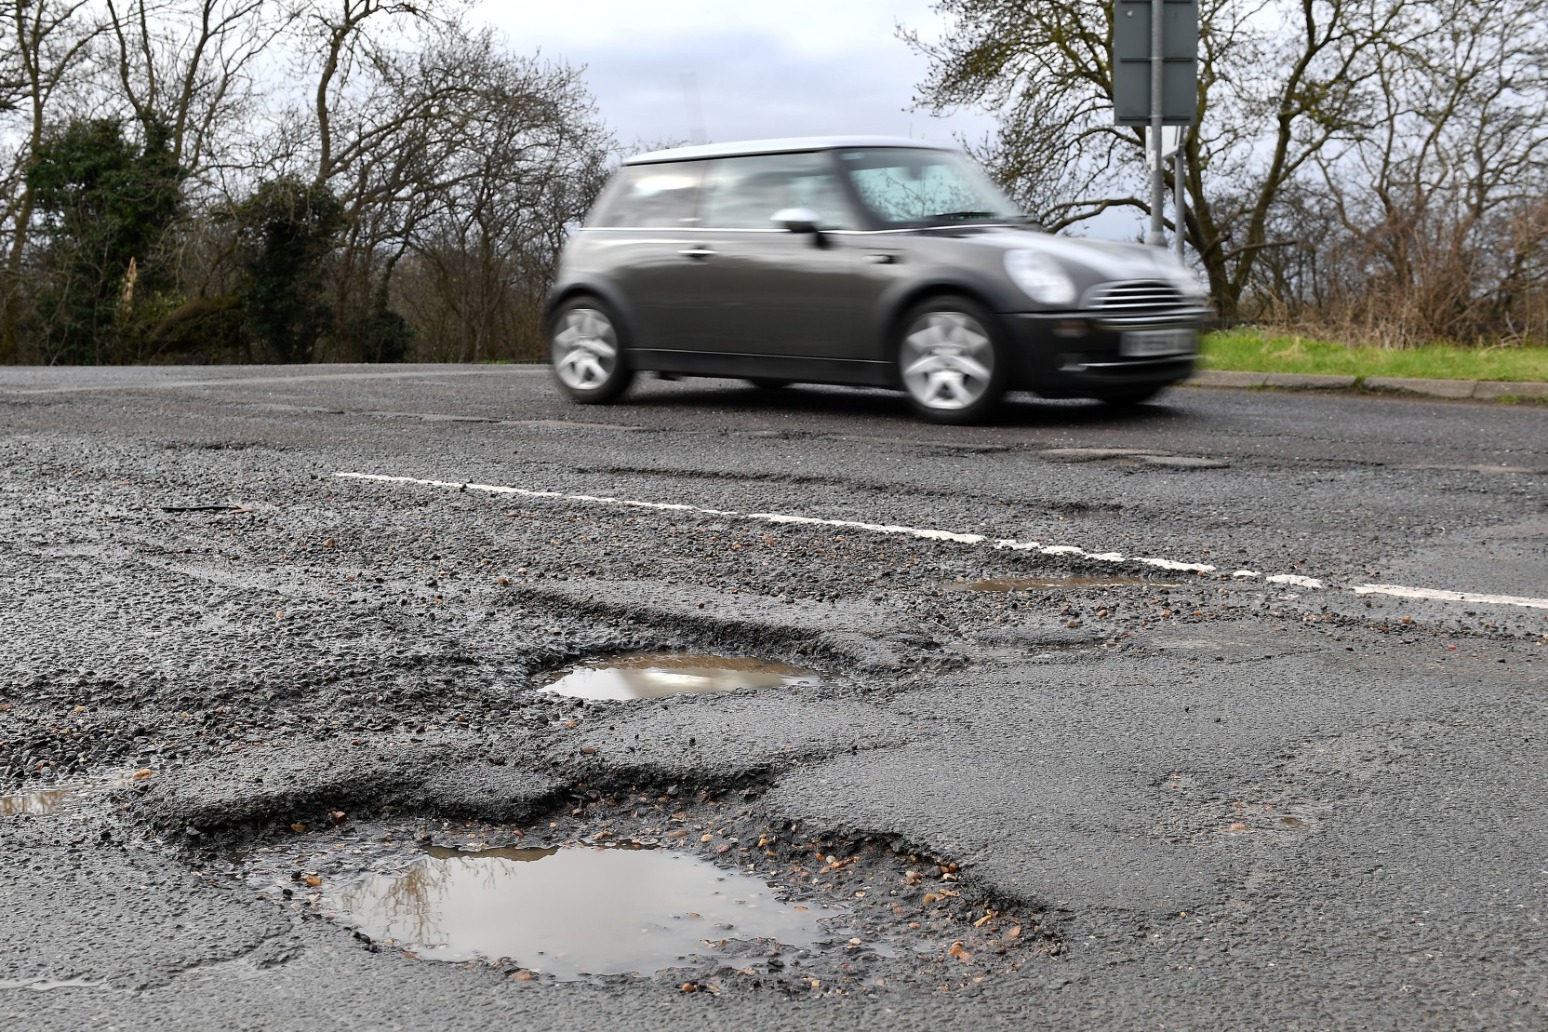 Councils say extra cars causing potholes 